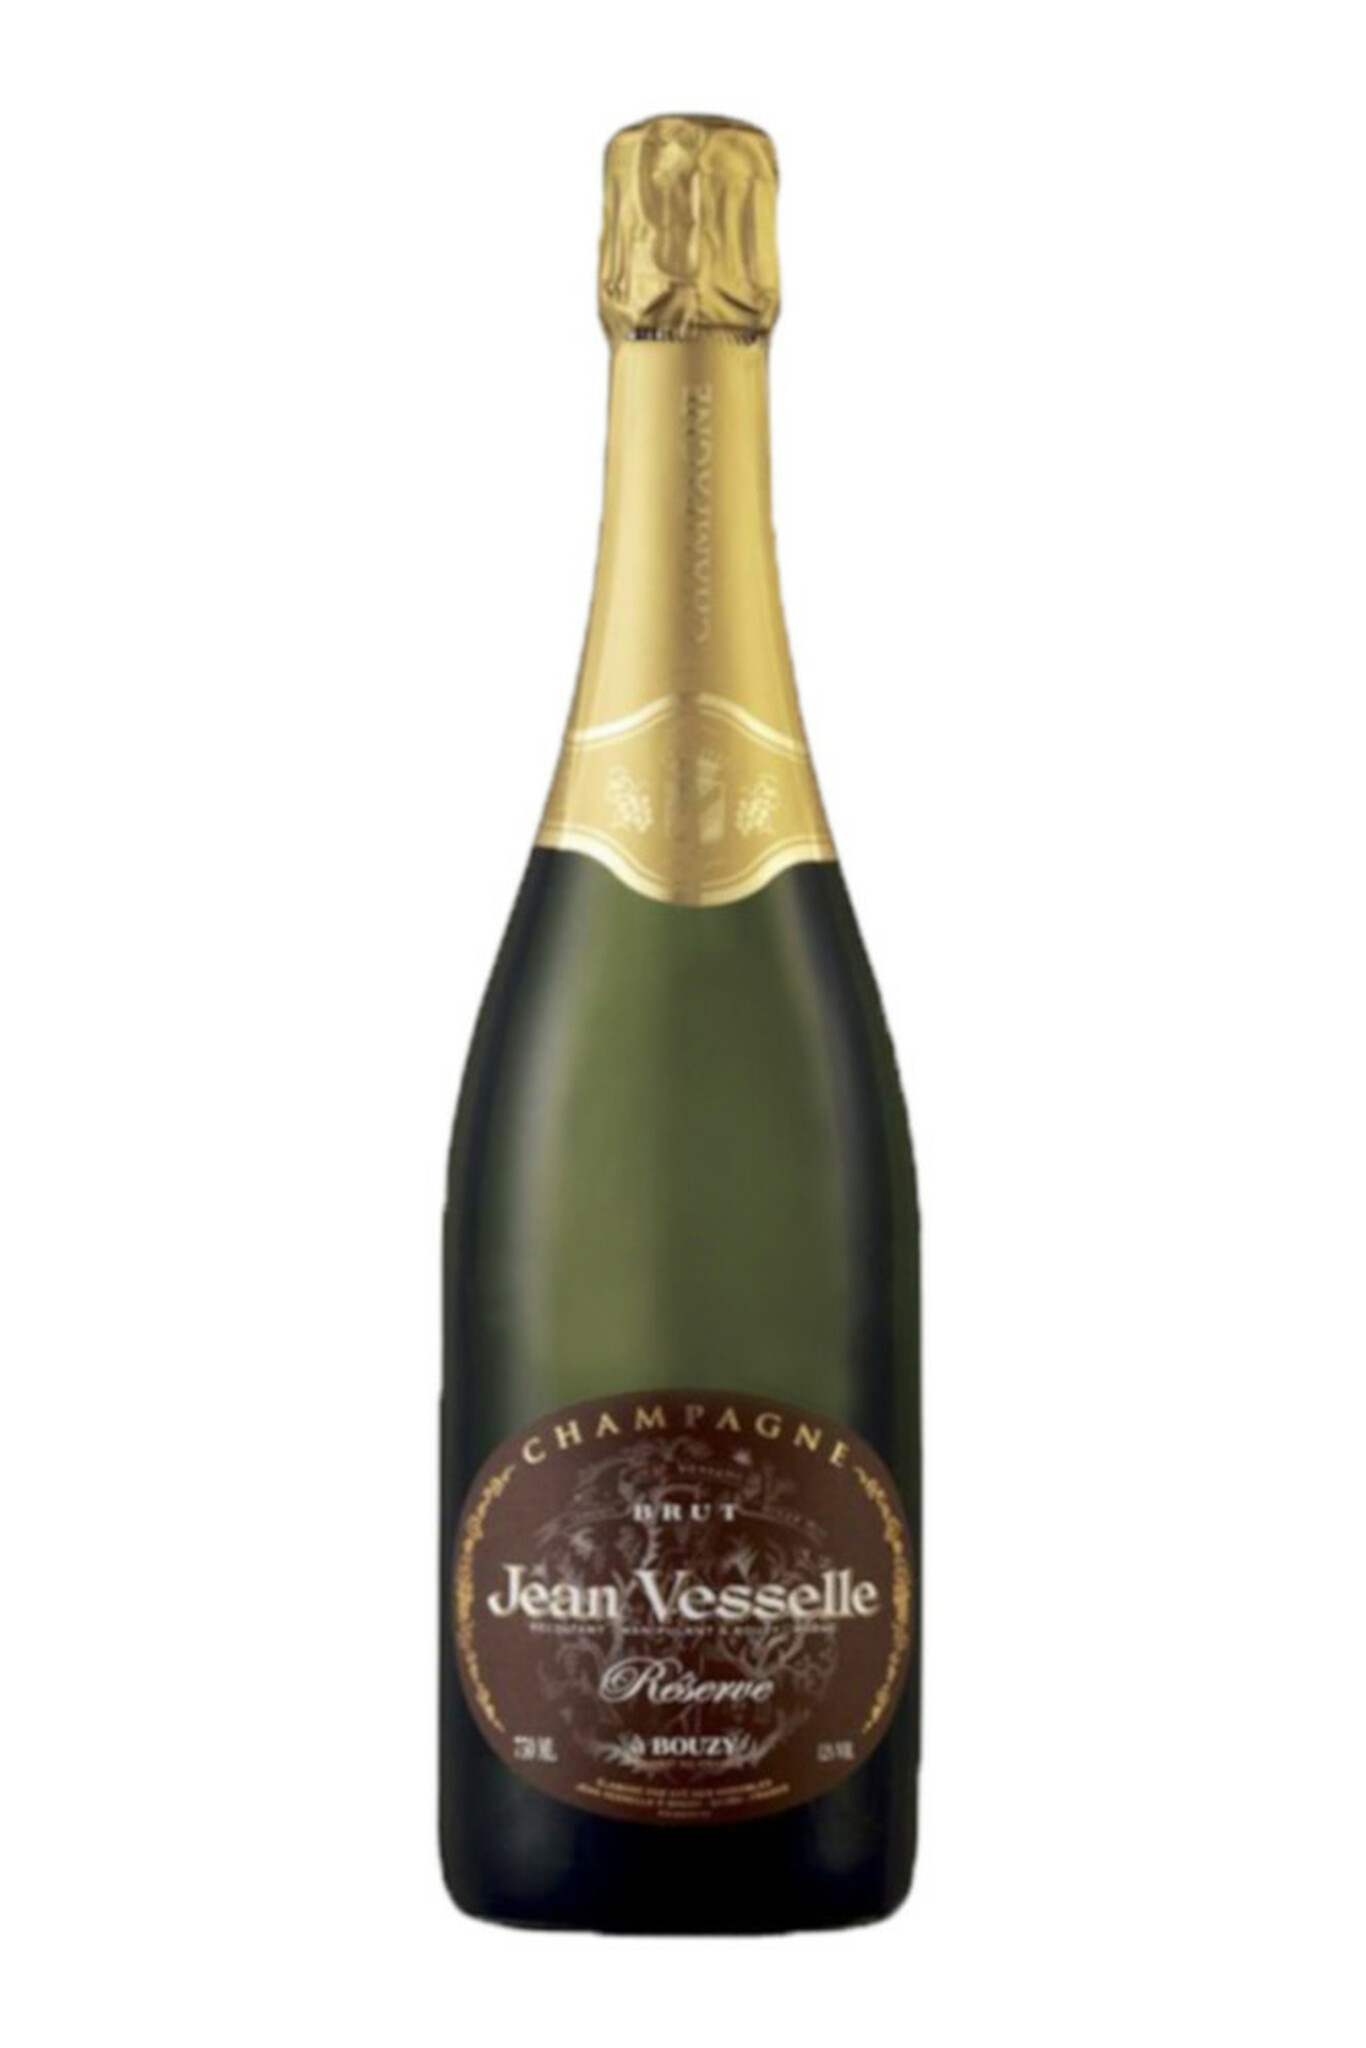 Jean Vesselle Brut Reserve Champagne NV 750ml